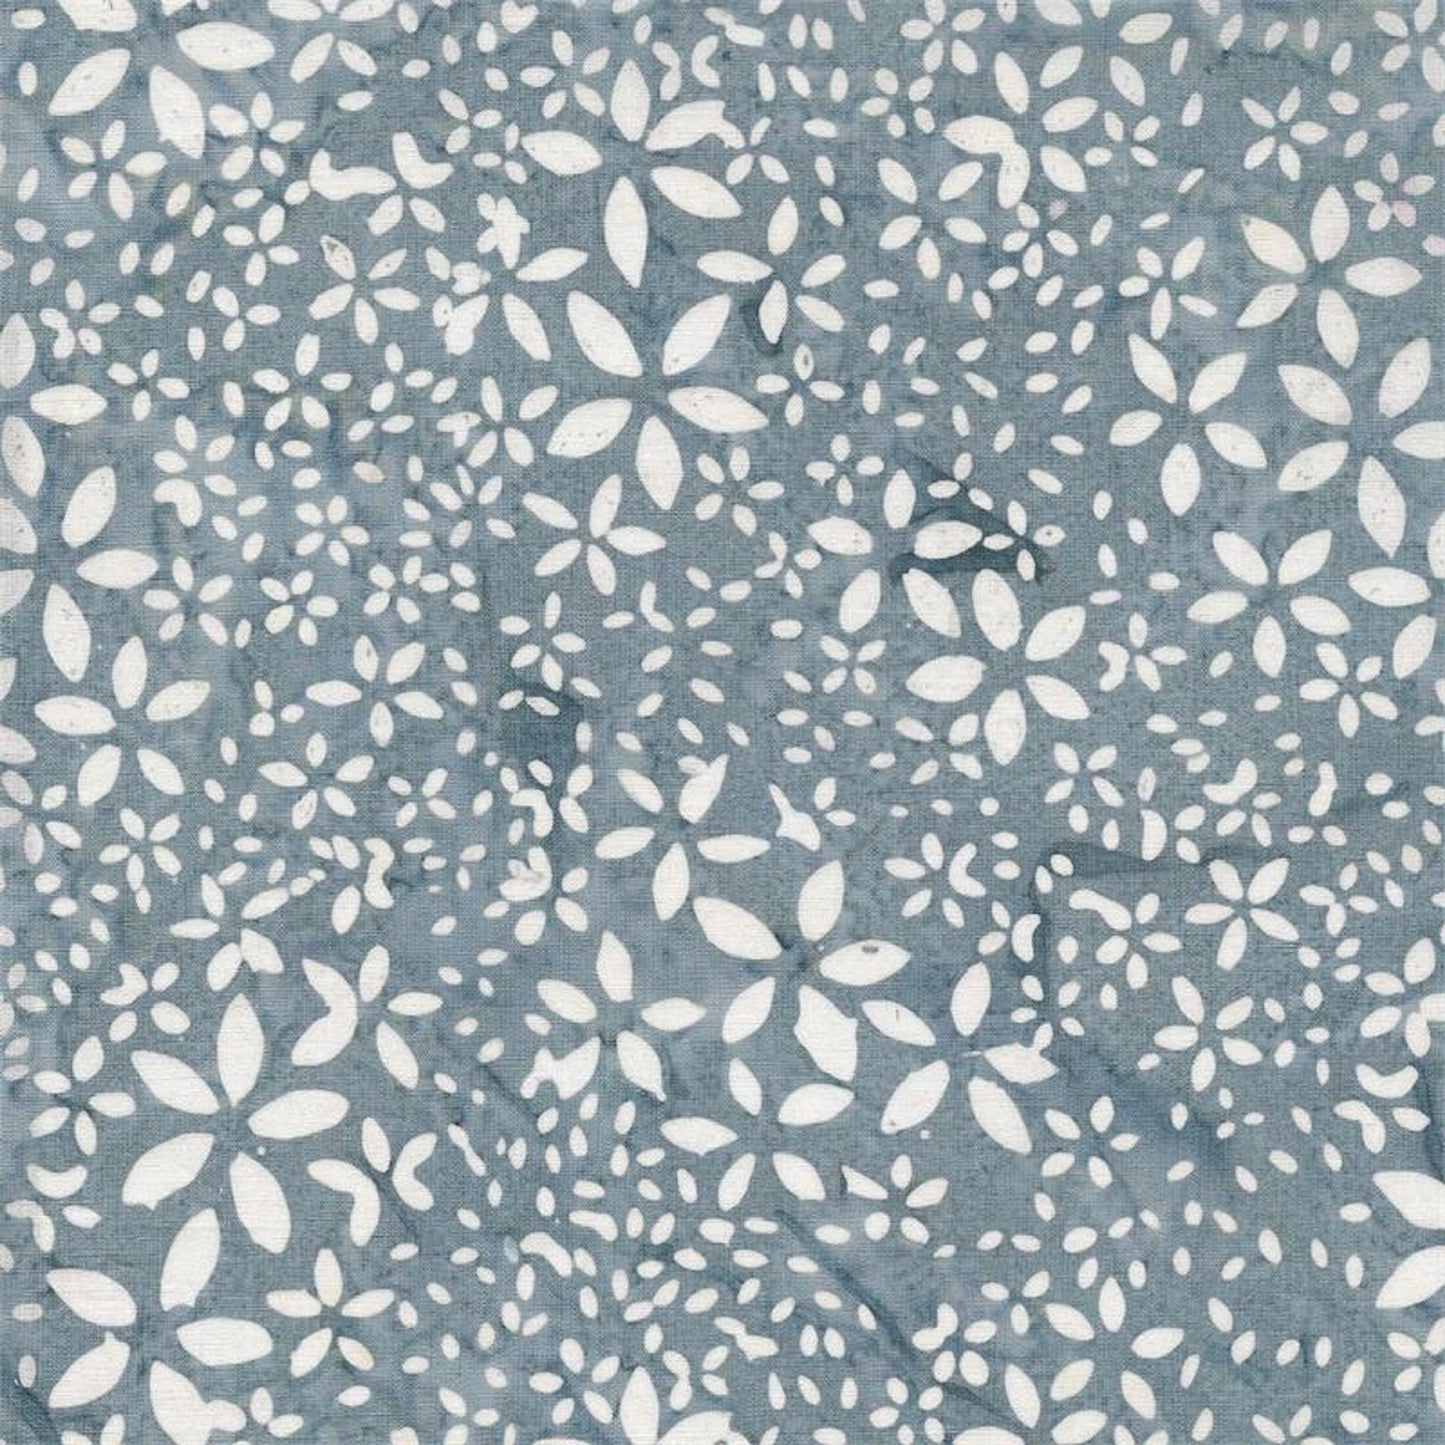 Batik Textiles-#5731-Novelty Print-White on Gray B/G-Fat Quarater